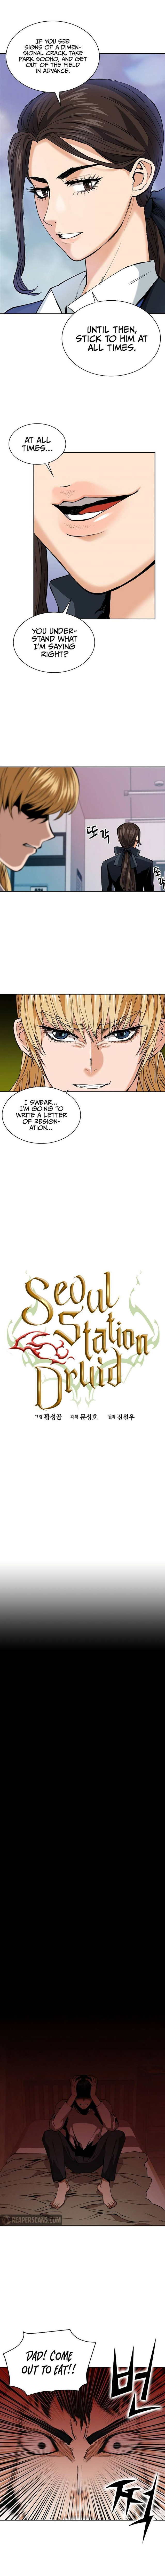 seoul_station_druid_23_2